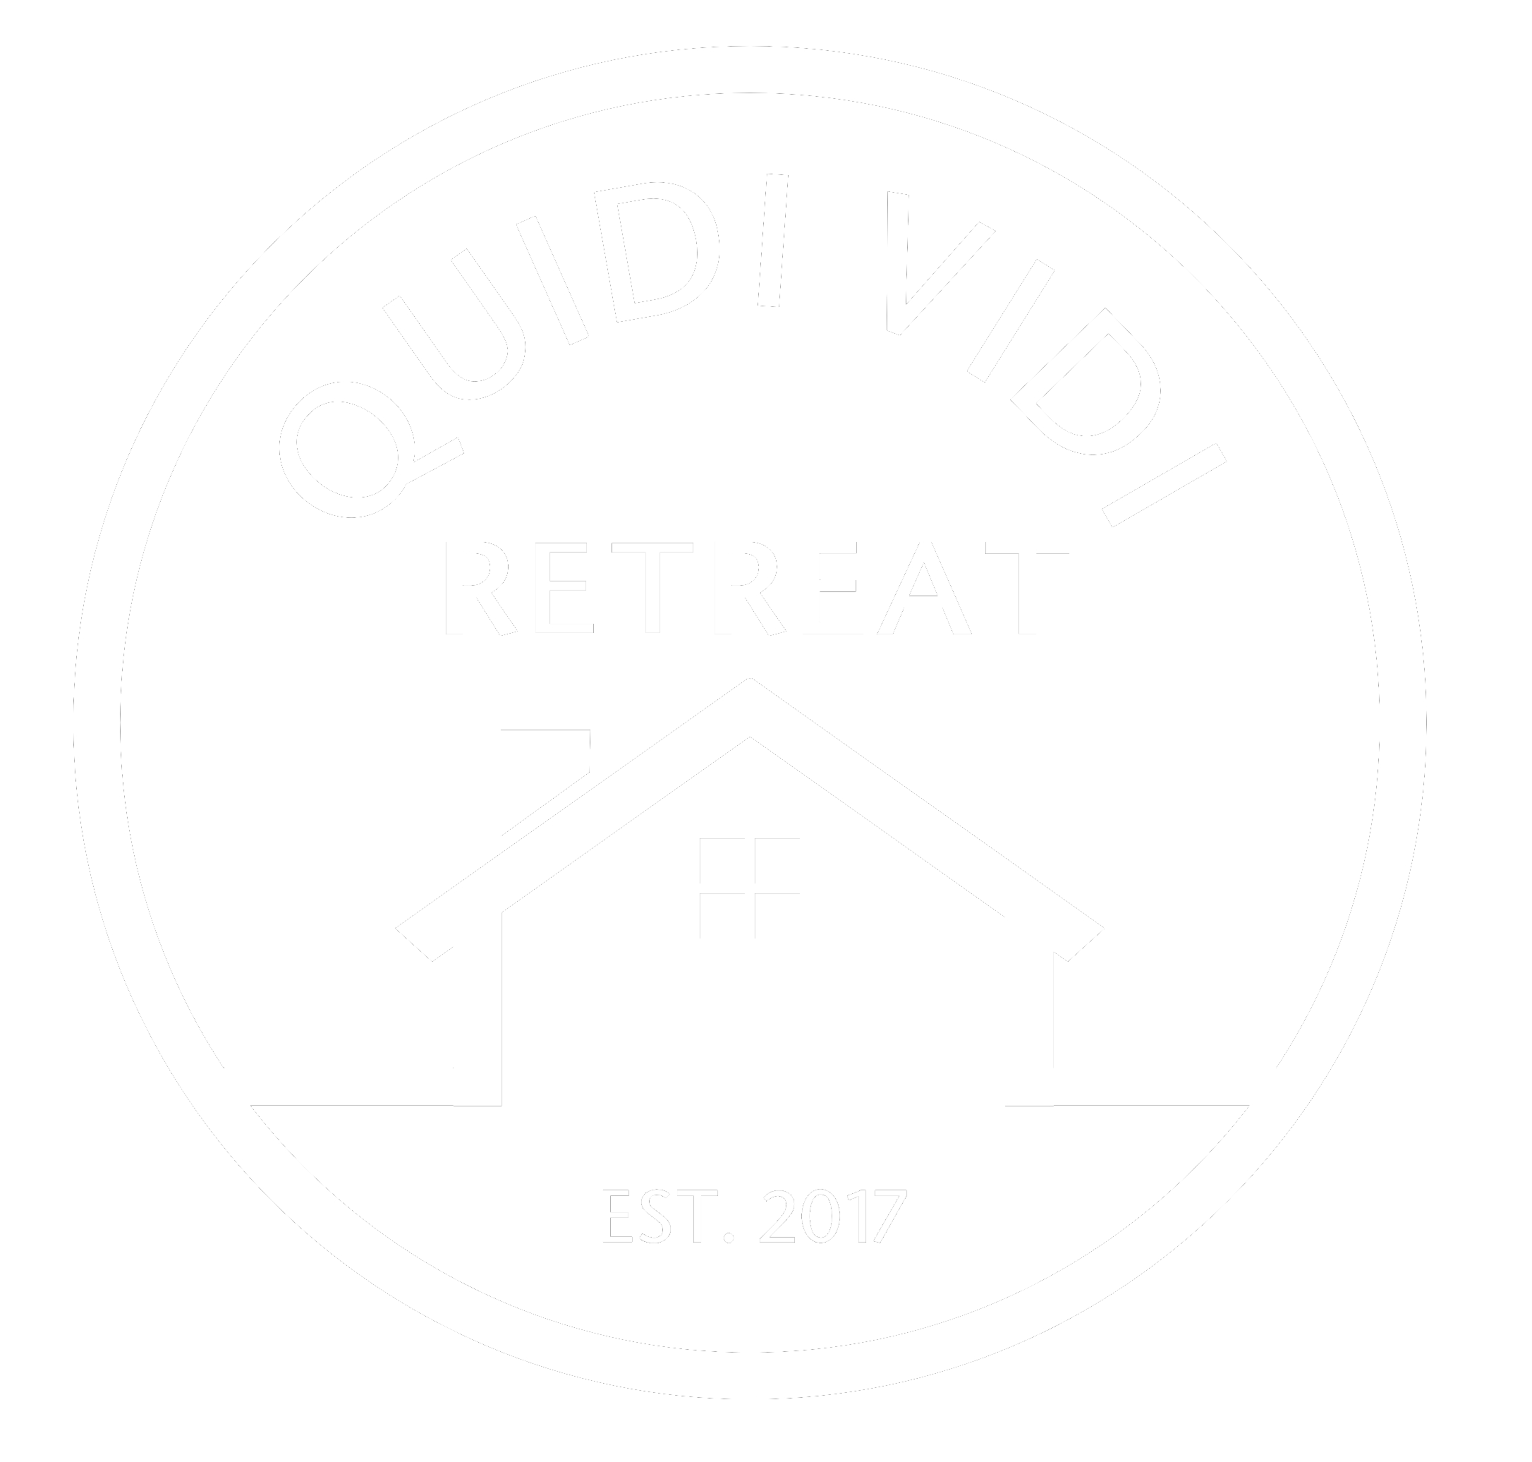 Quidi Vidi Retreat | Vacation Home Accommodations in the Heart of Historic St. John's, Newfoundland, Canada